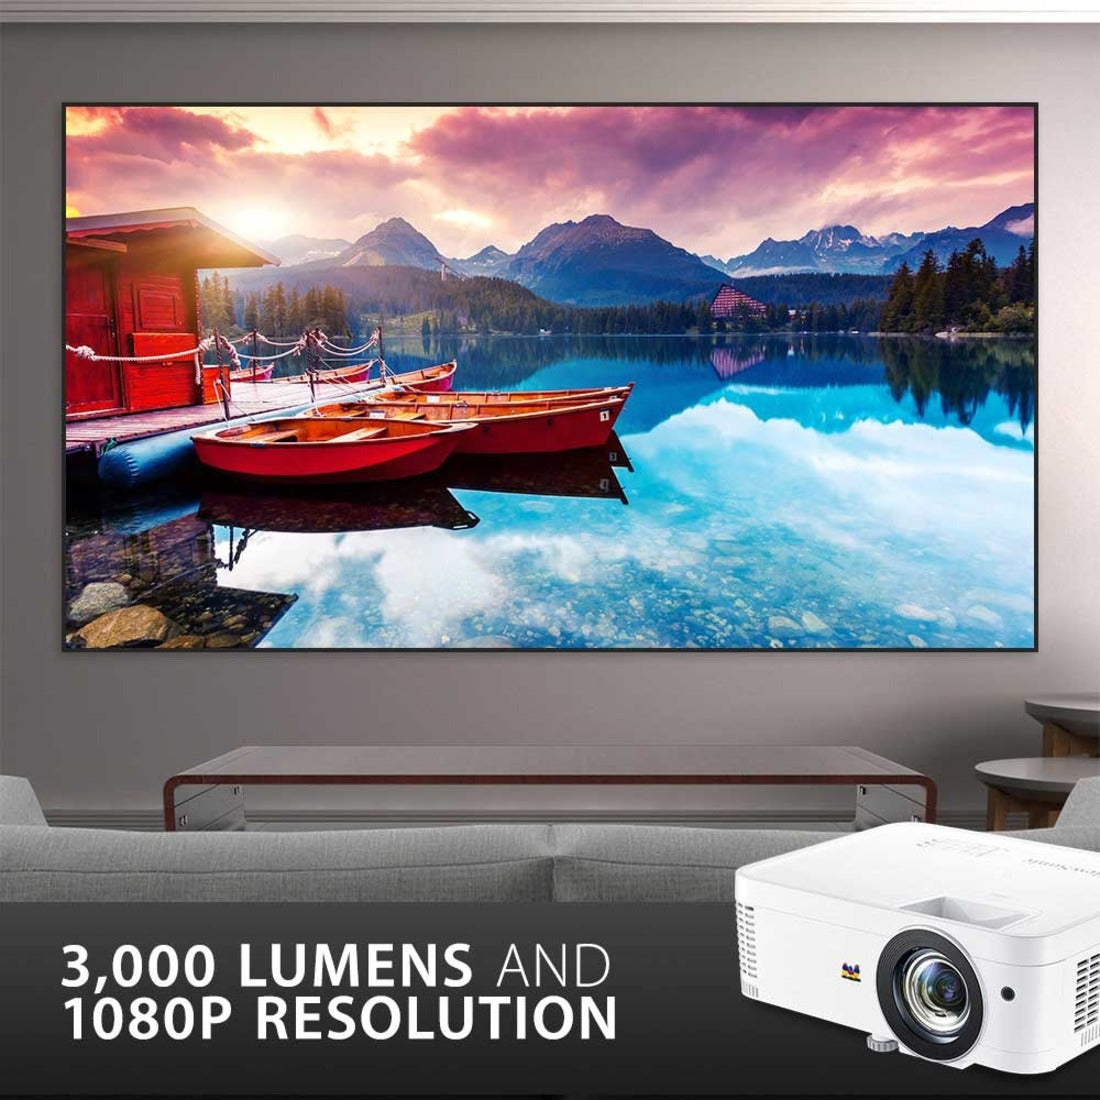 ViewSonic PX706HD DLP Projector, 1080p Short Throw Gaming, 3,000 lumens, Dual 3D Blu-ray Ready HDMI Inputs